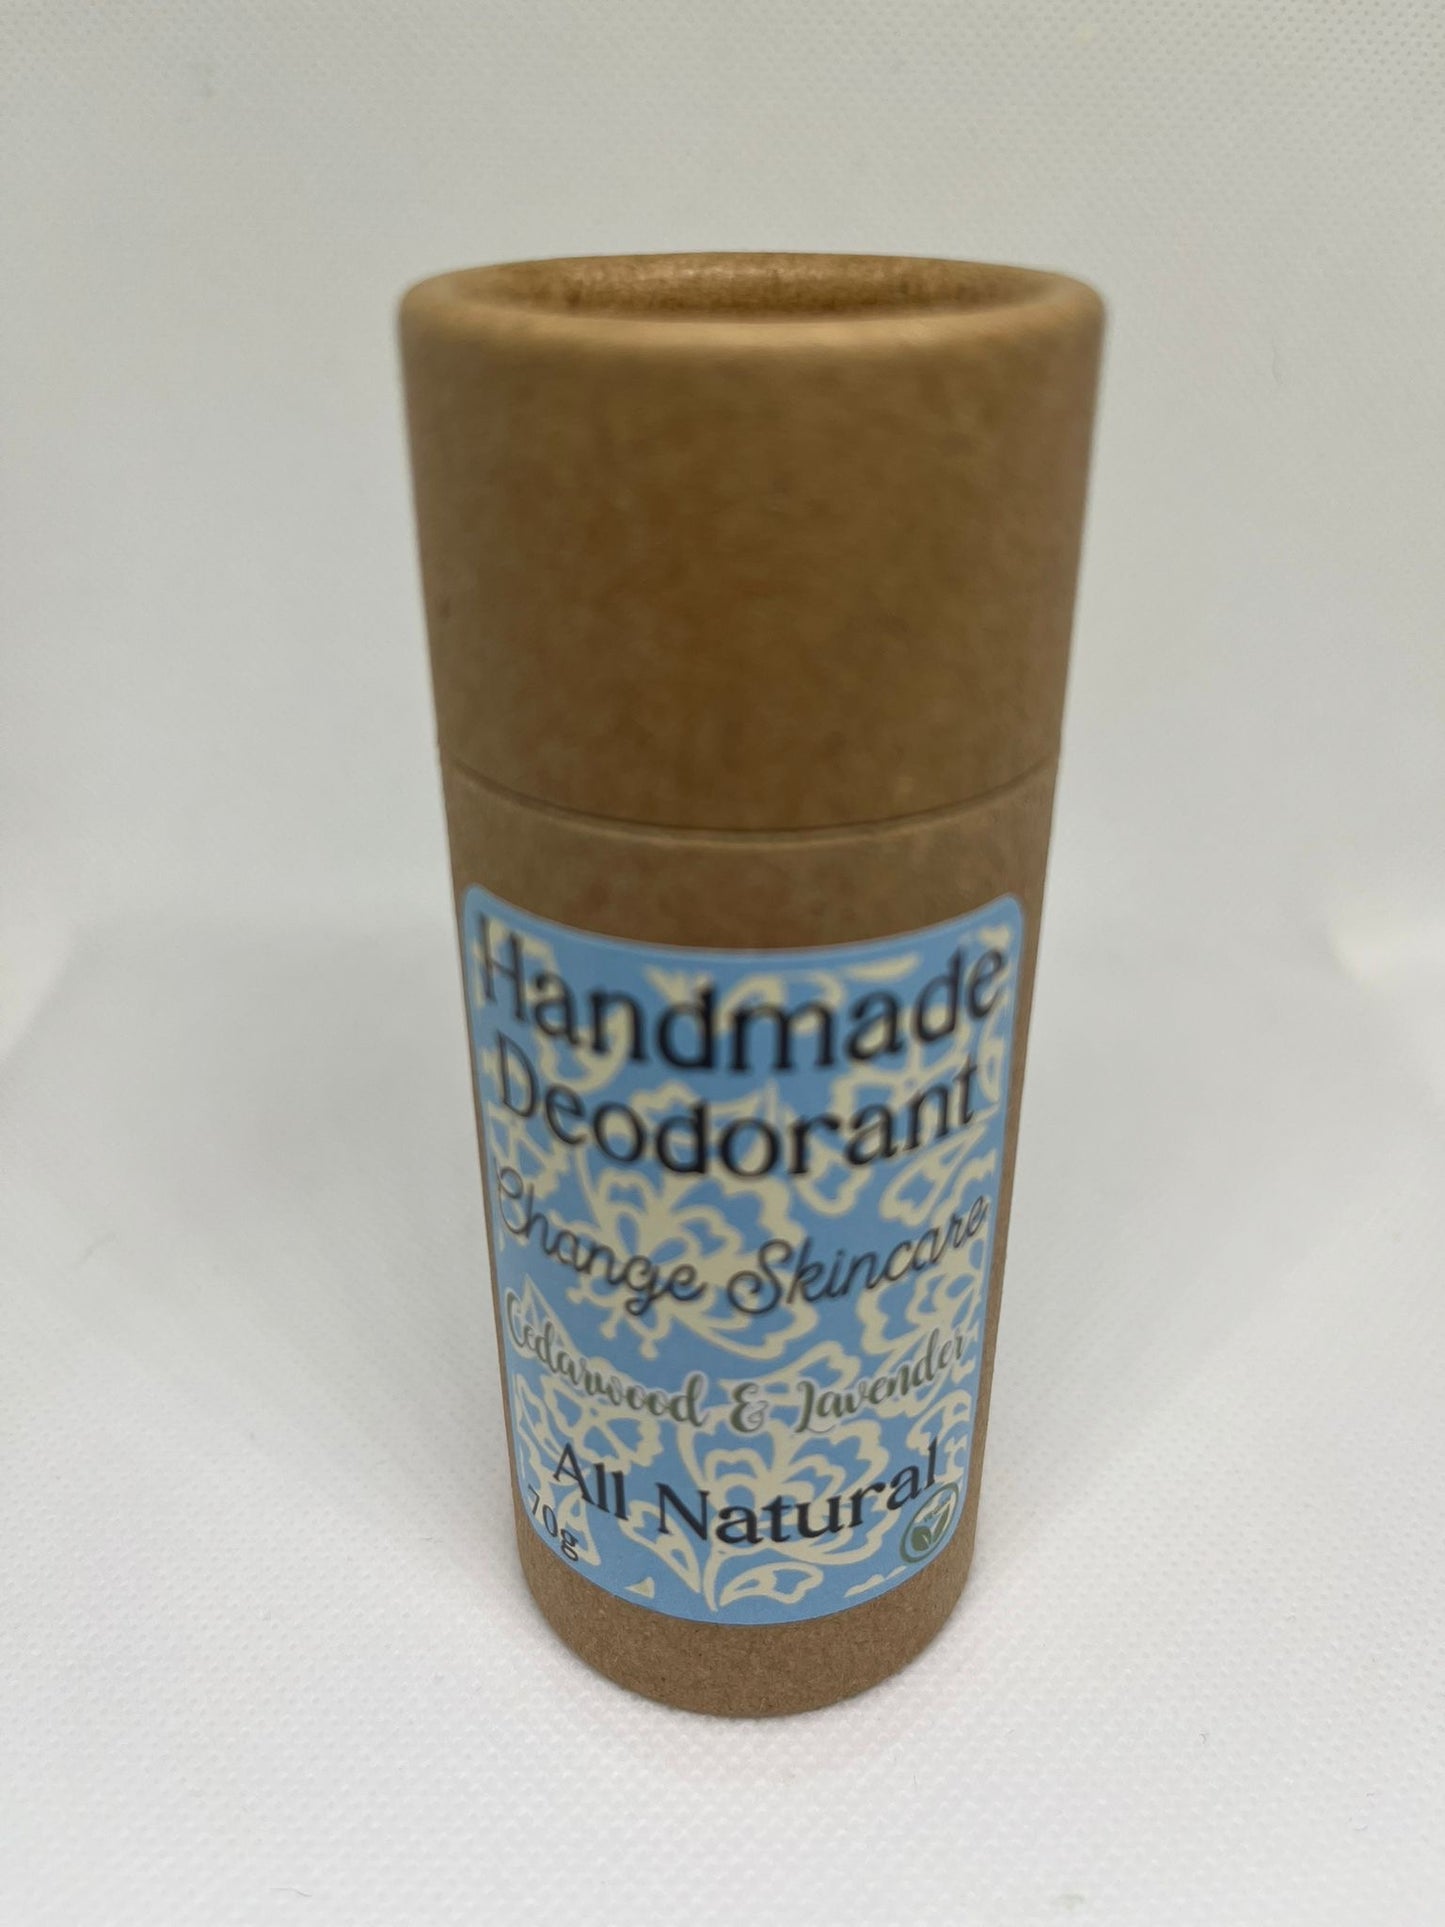 Natural Deodorant with Cedarwood & Lavender